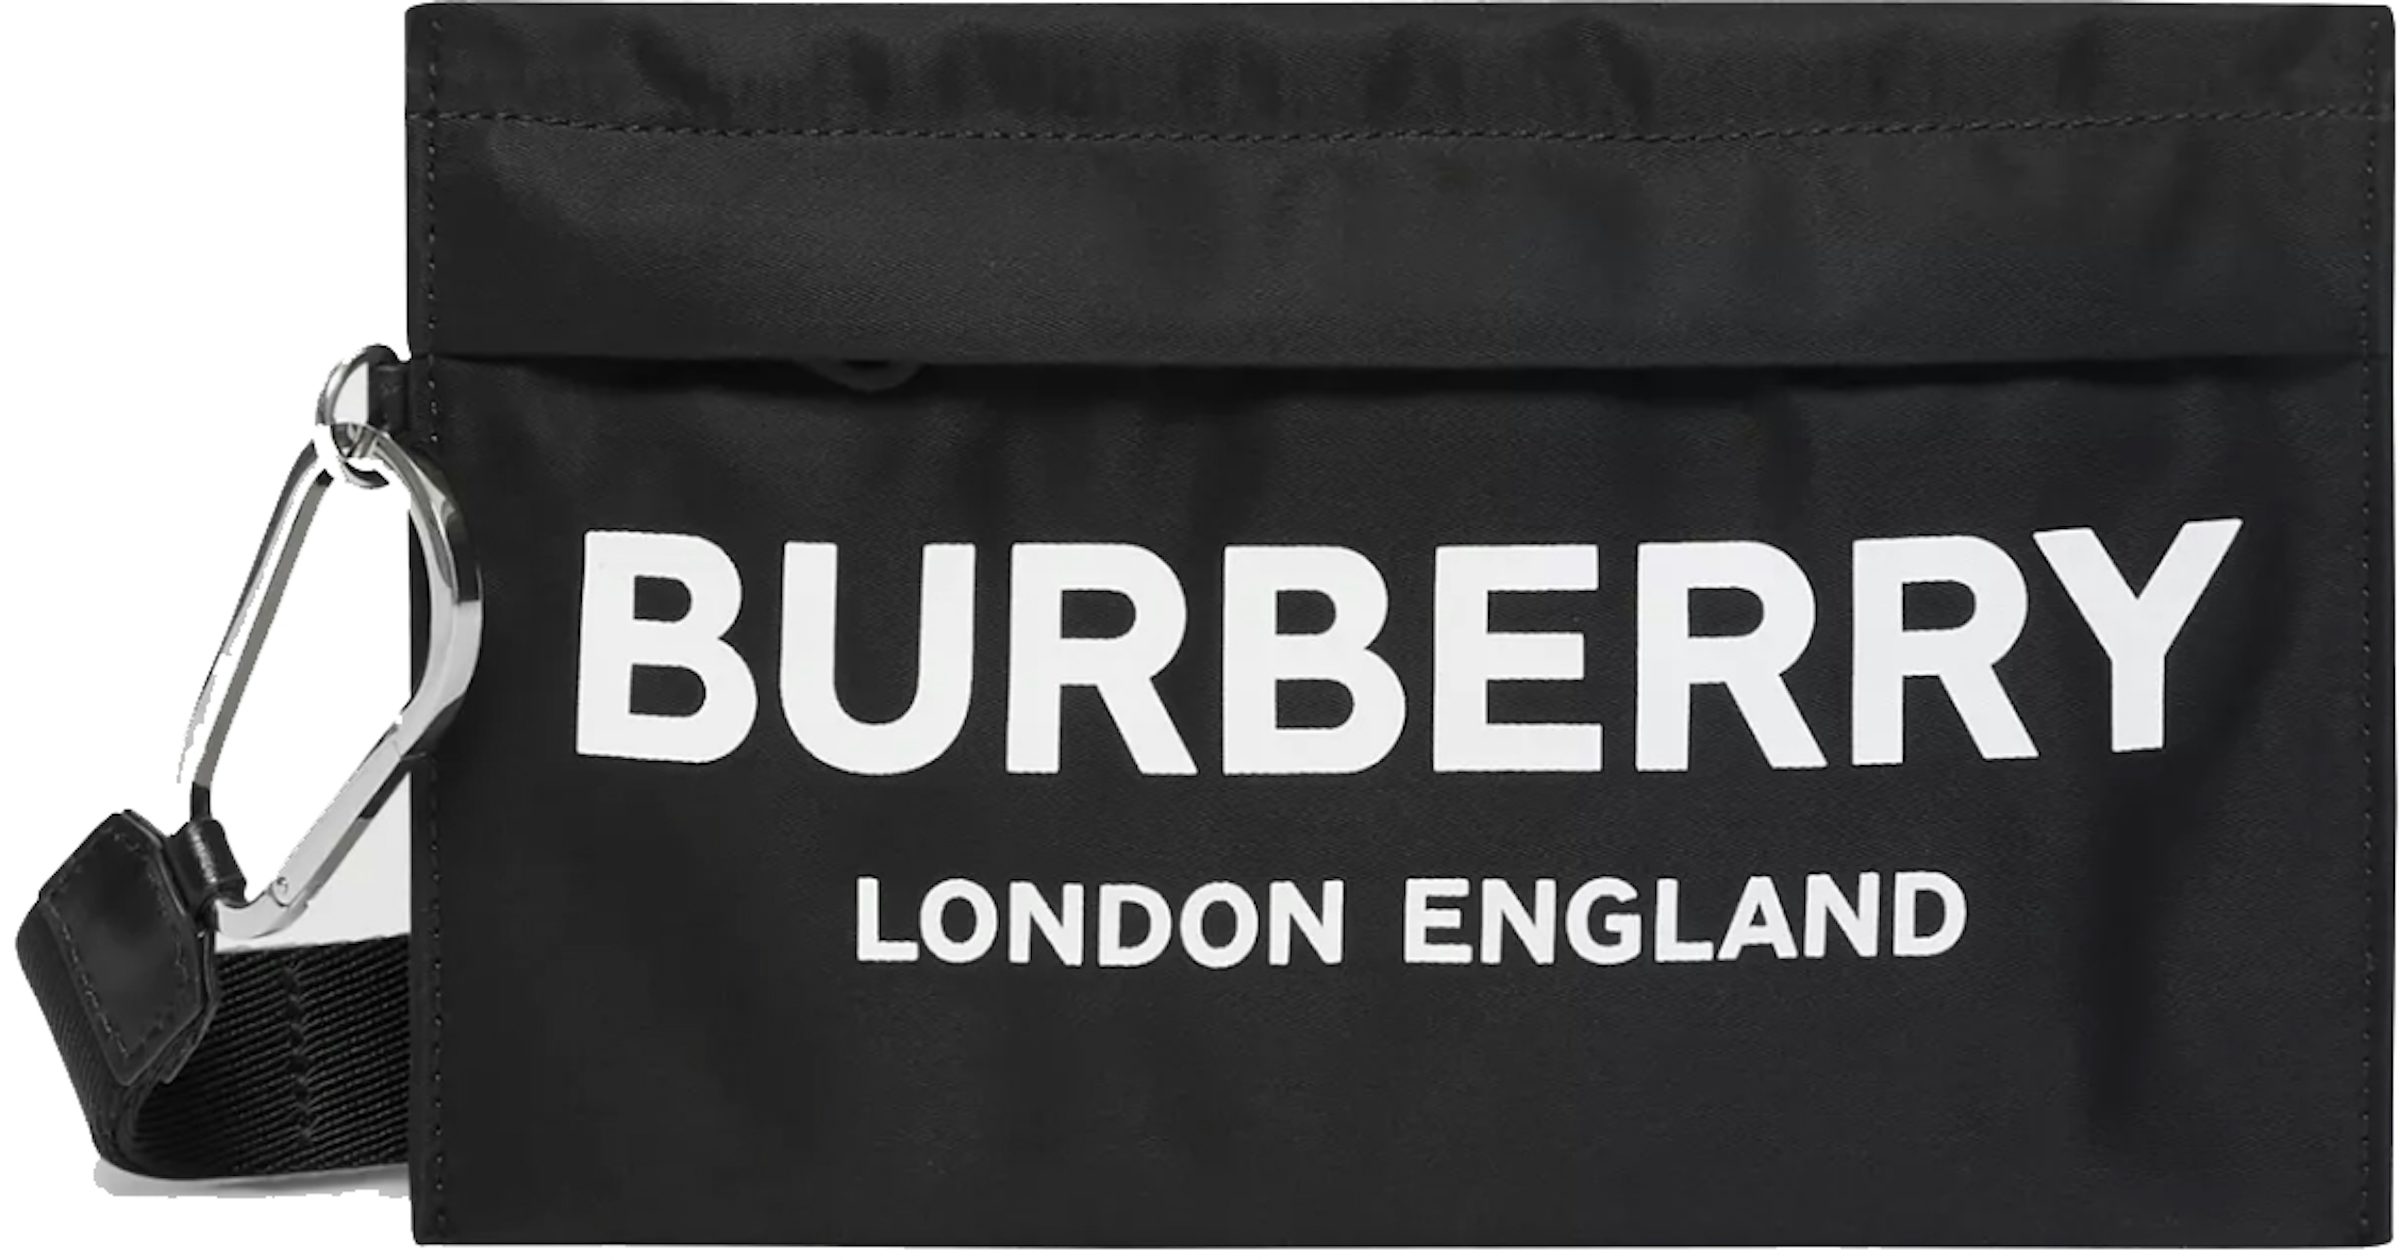 Burberry Logo Print Nylon Tote Black